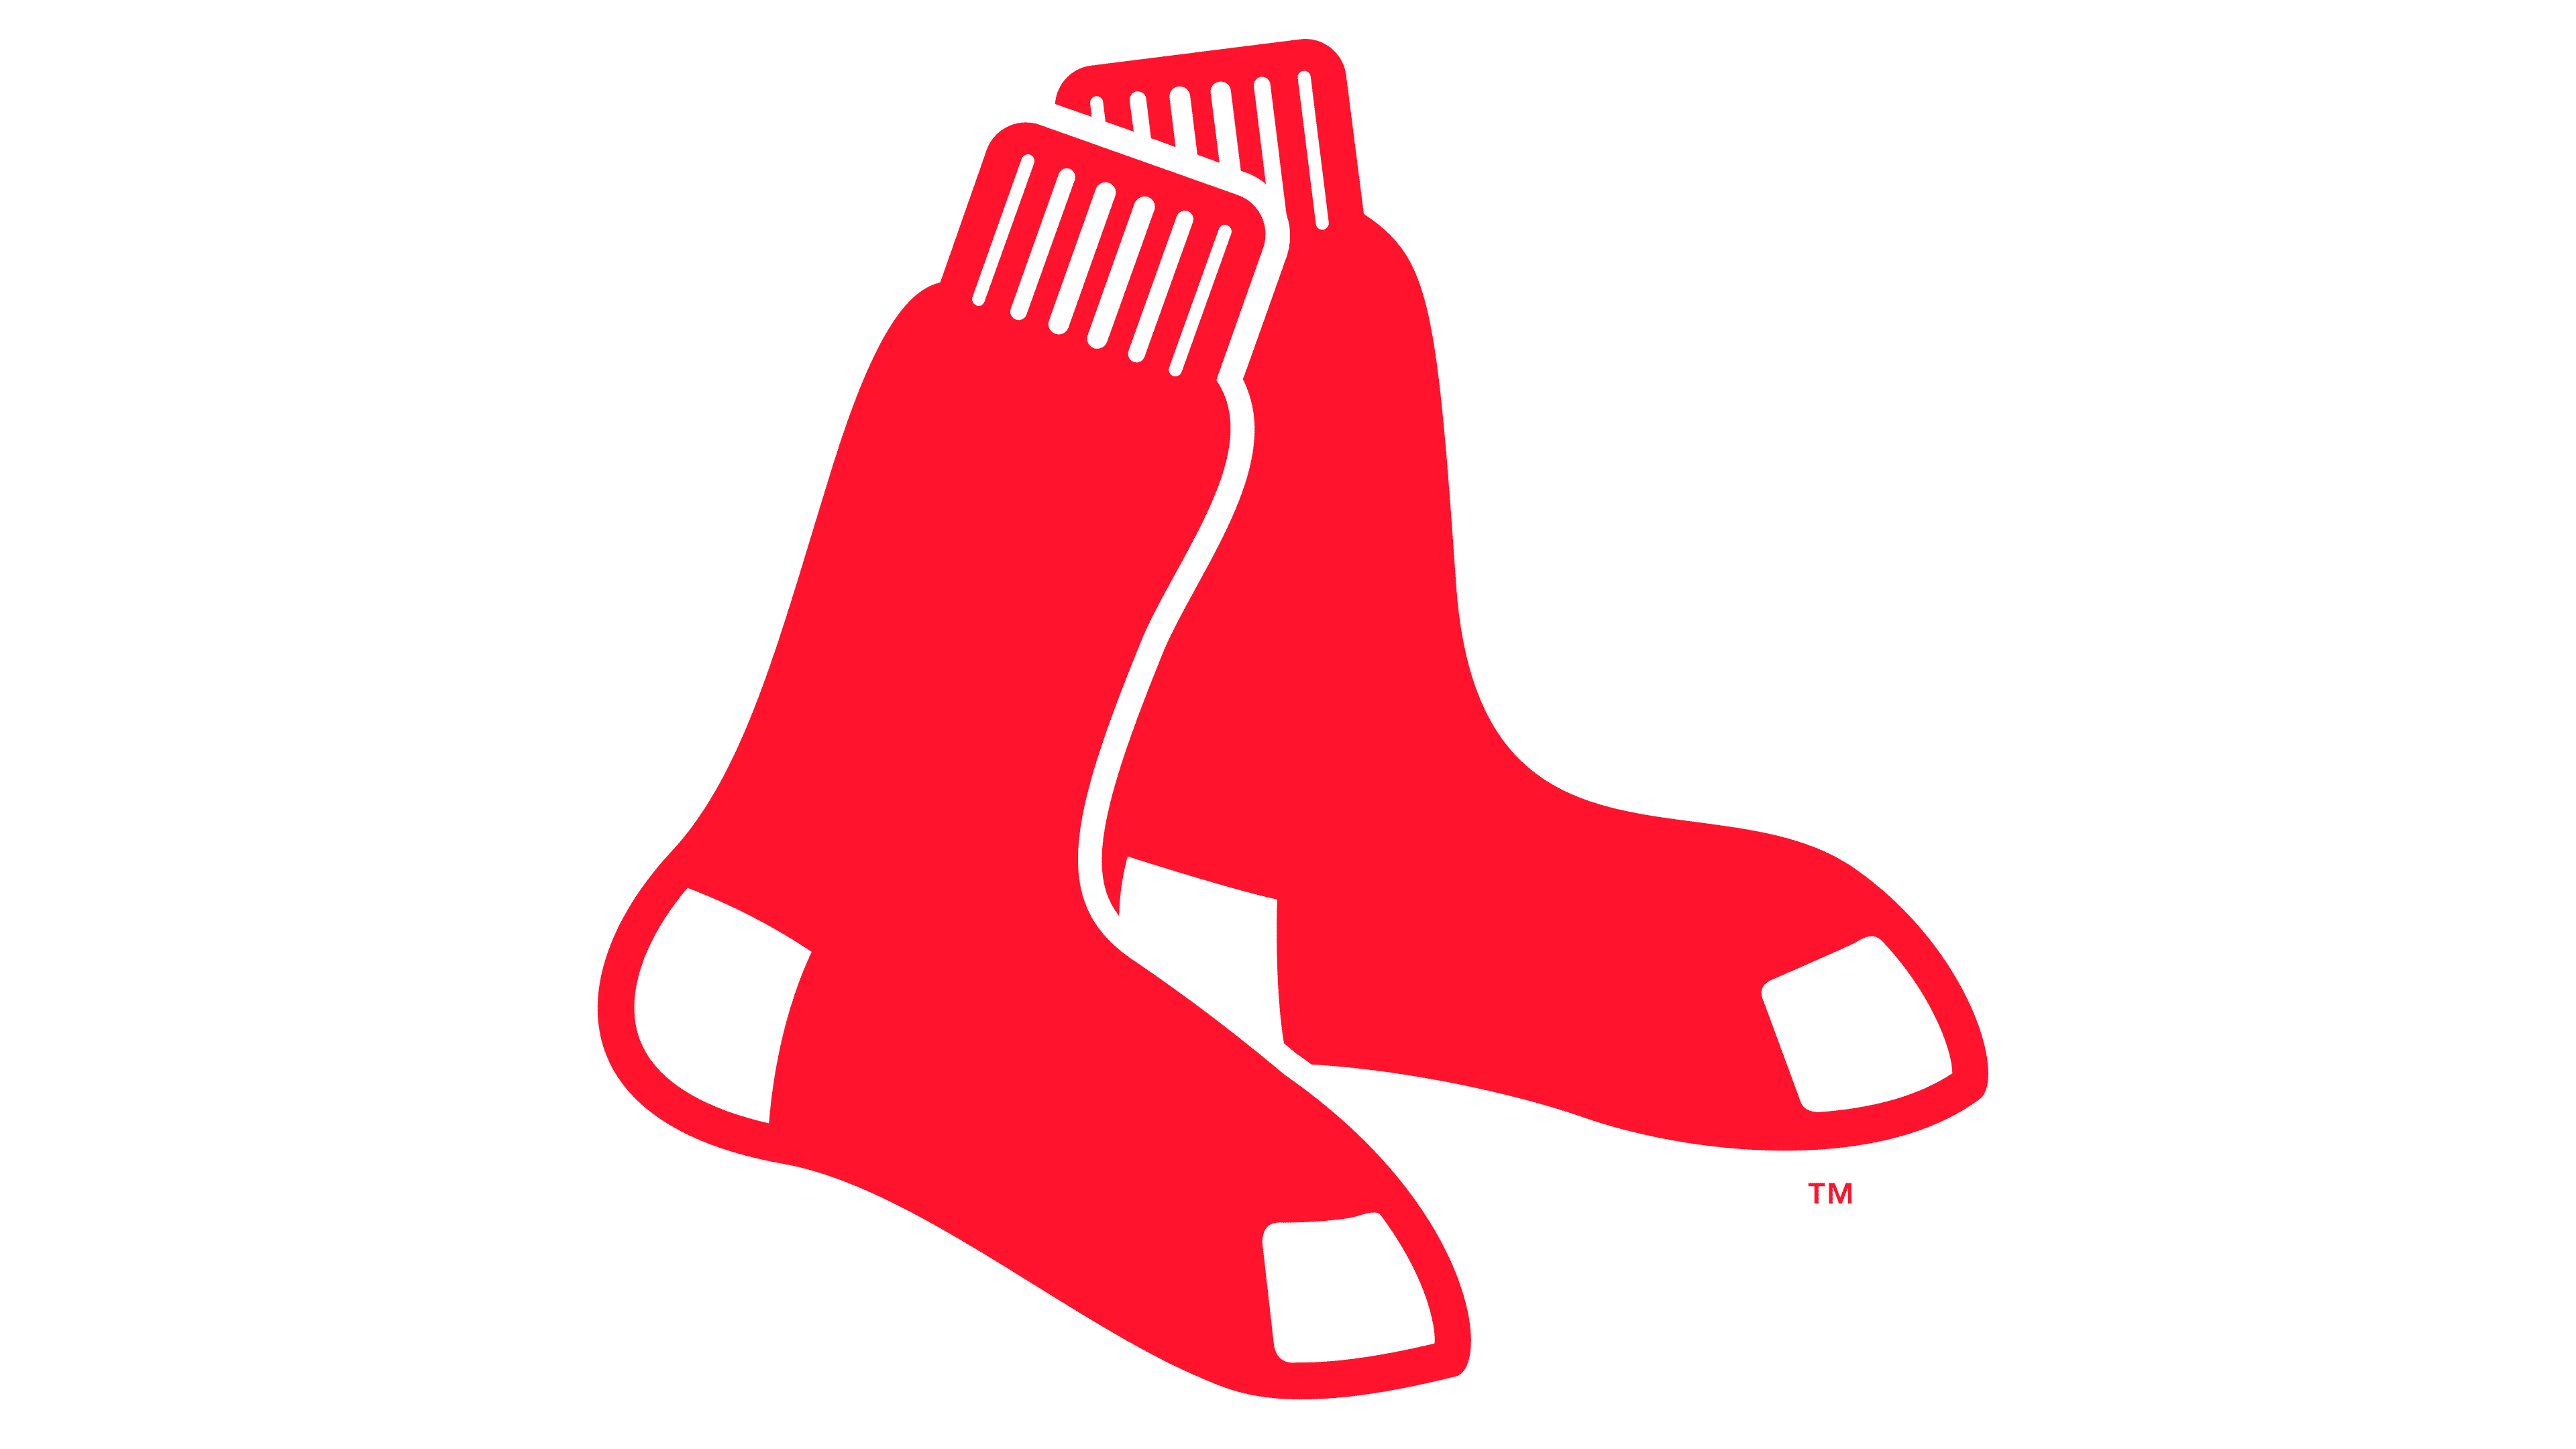 Boston Red Soxs News